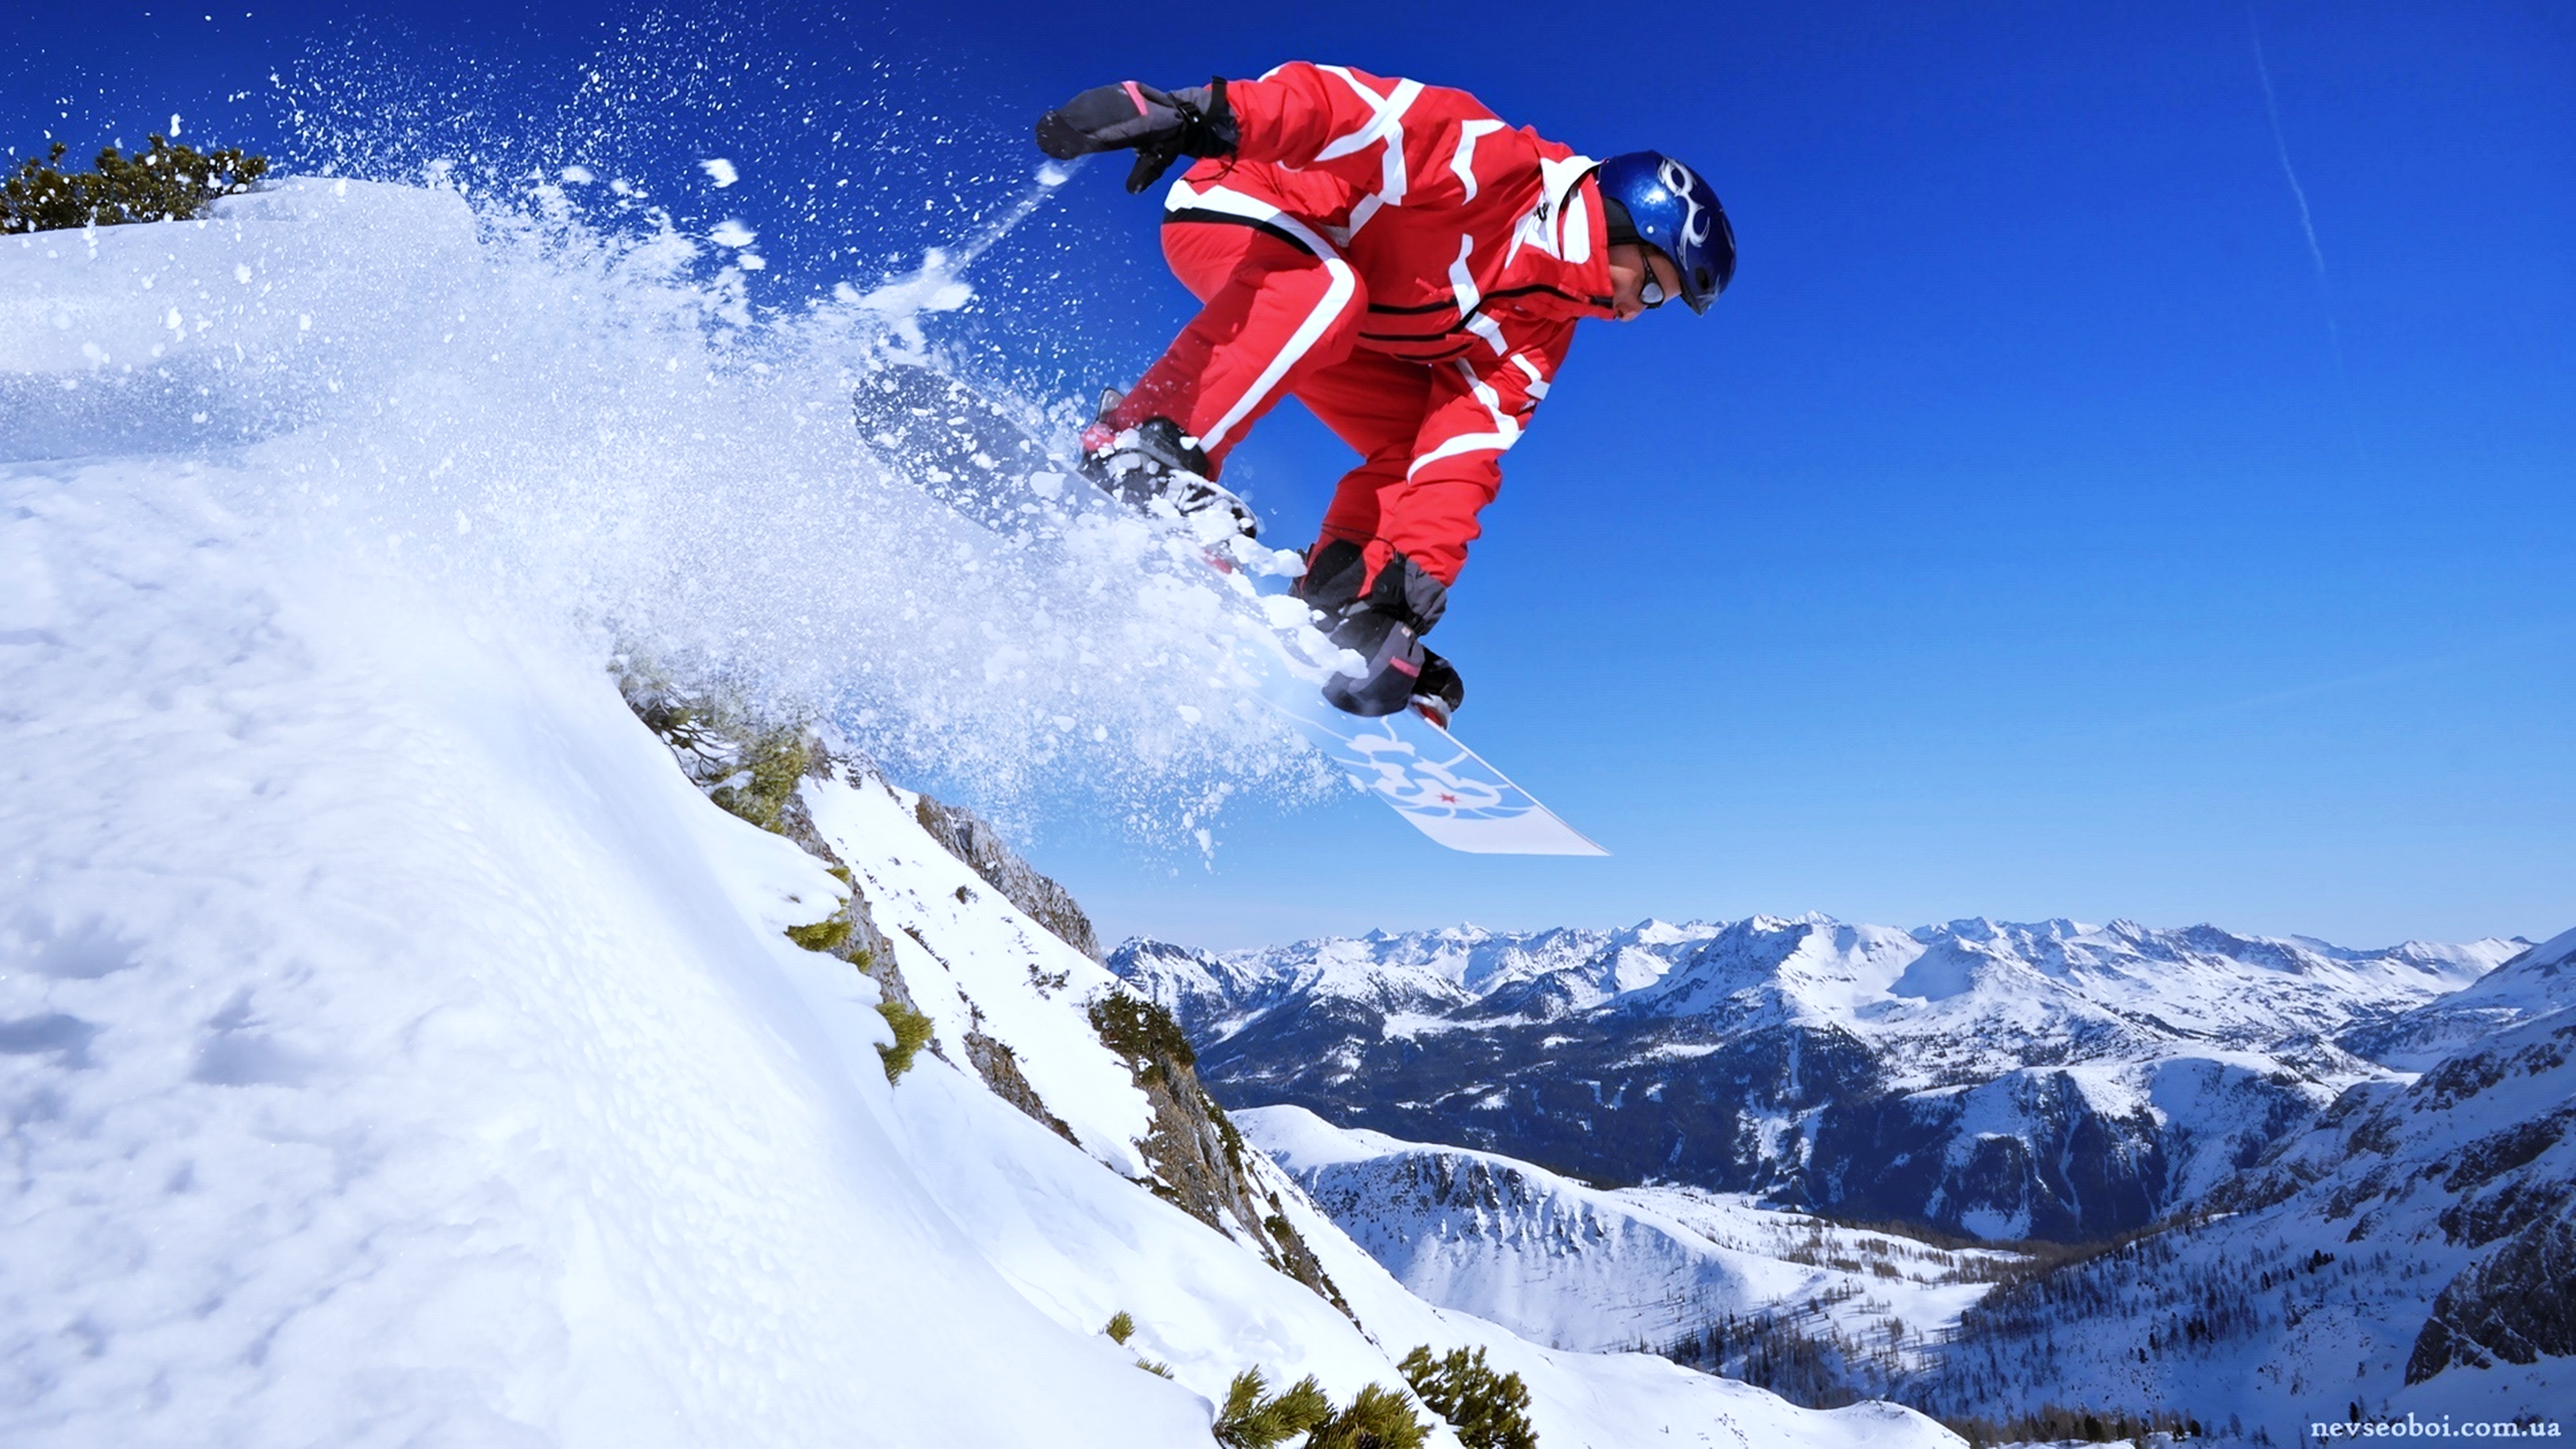 Snow Snowboarding Winter 3840x2160